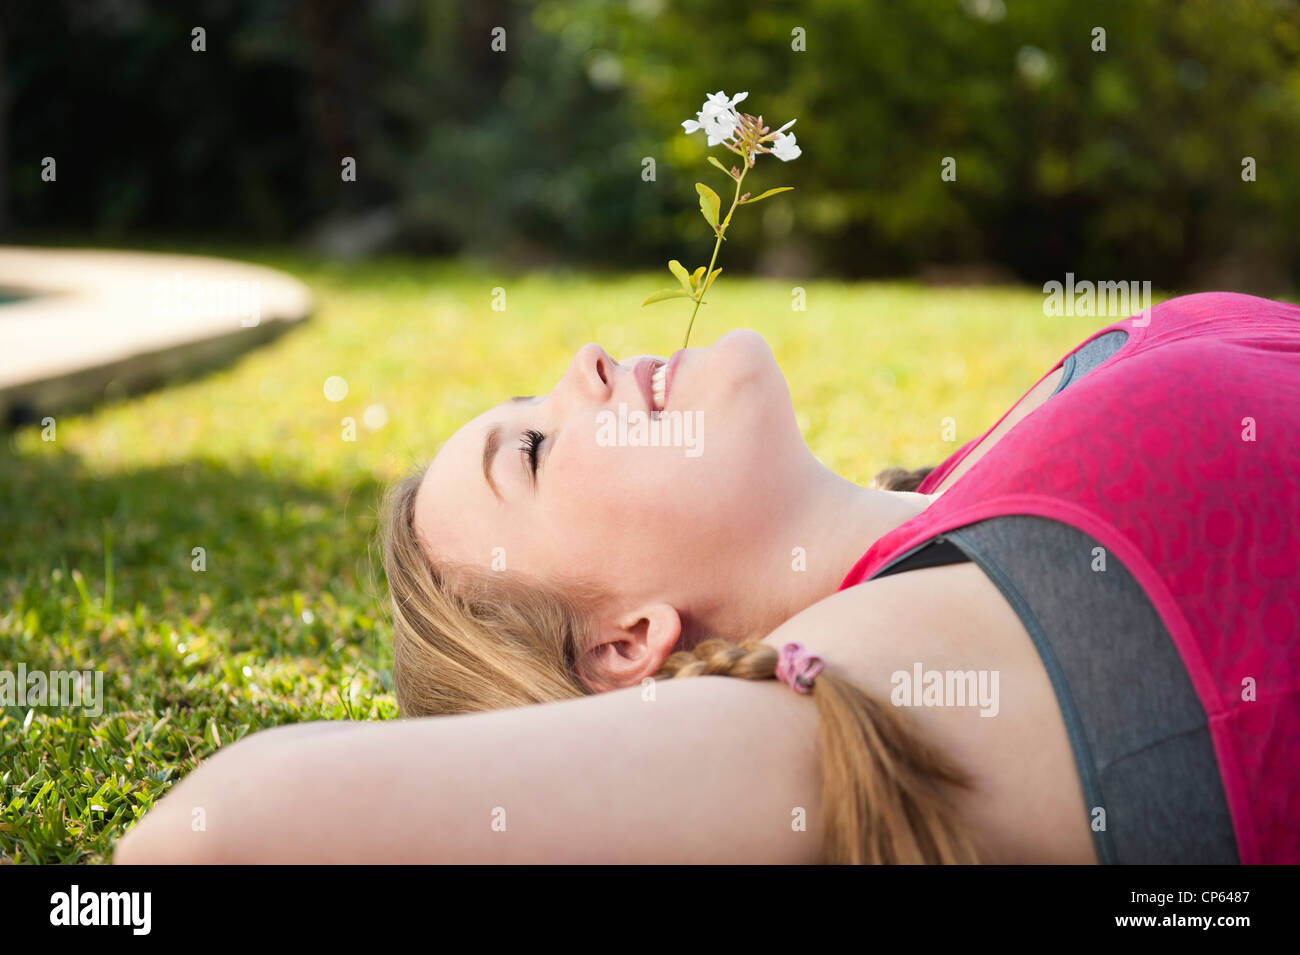 Spain, Mallorca, Teenage girl lying in grass, smiling Stock Photo